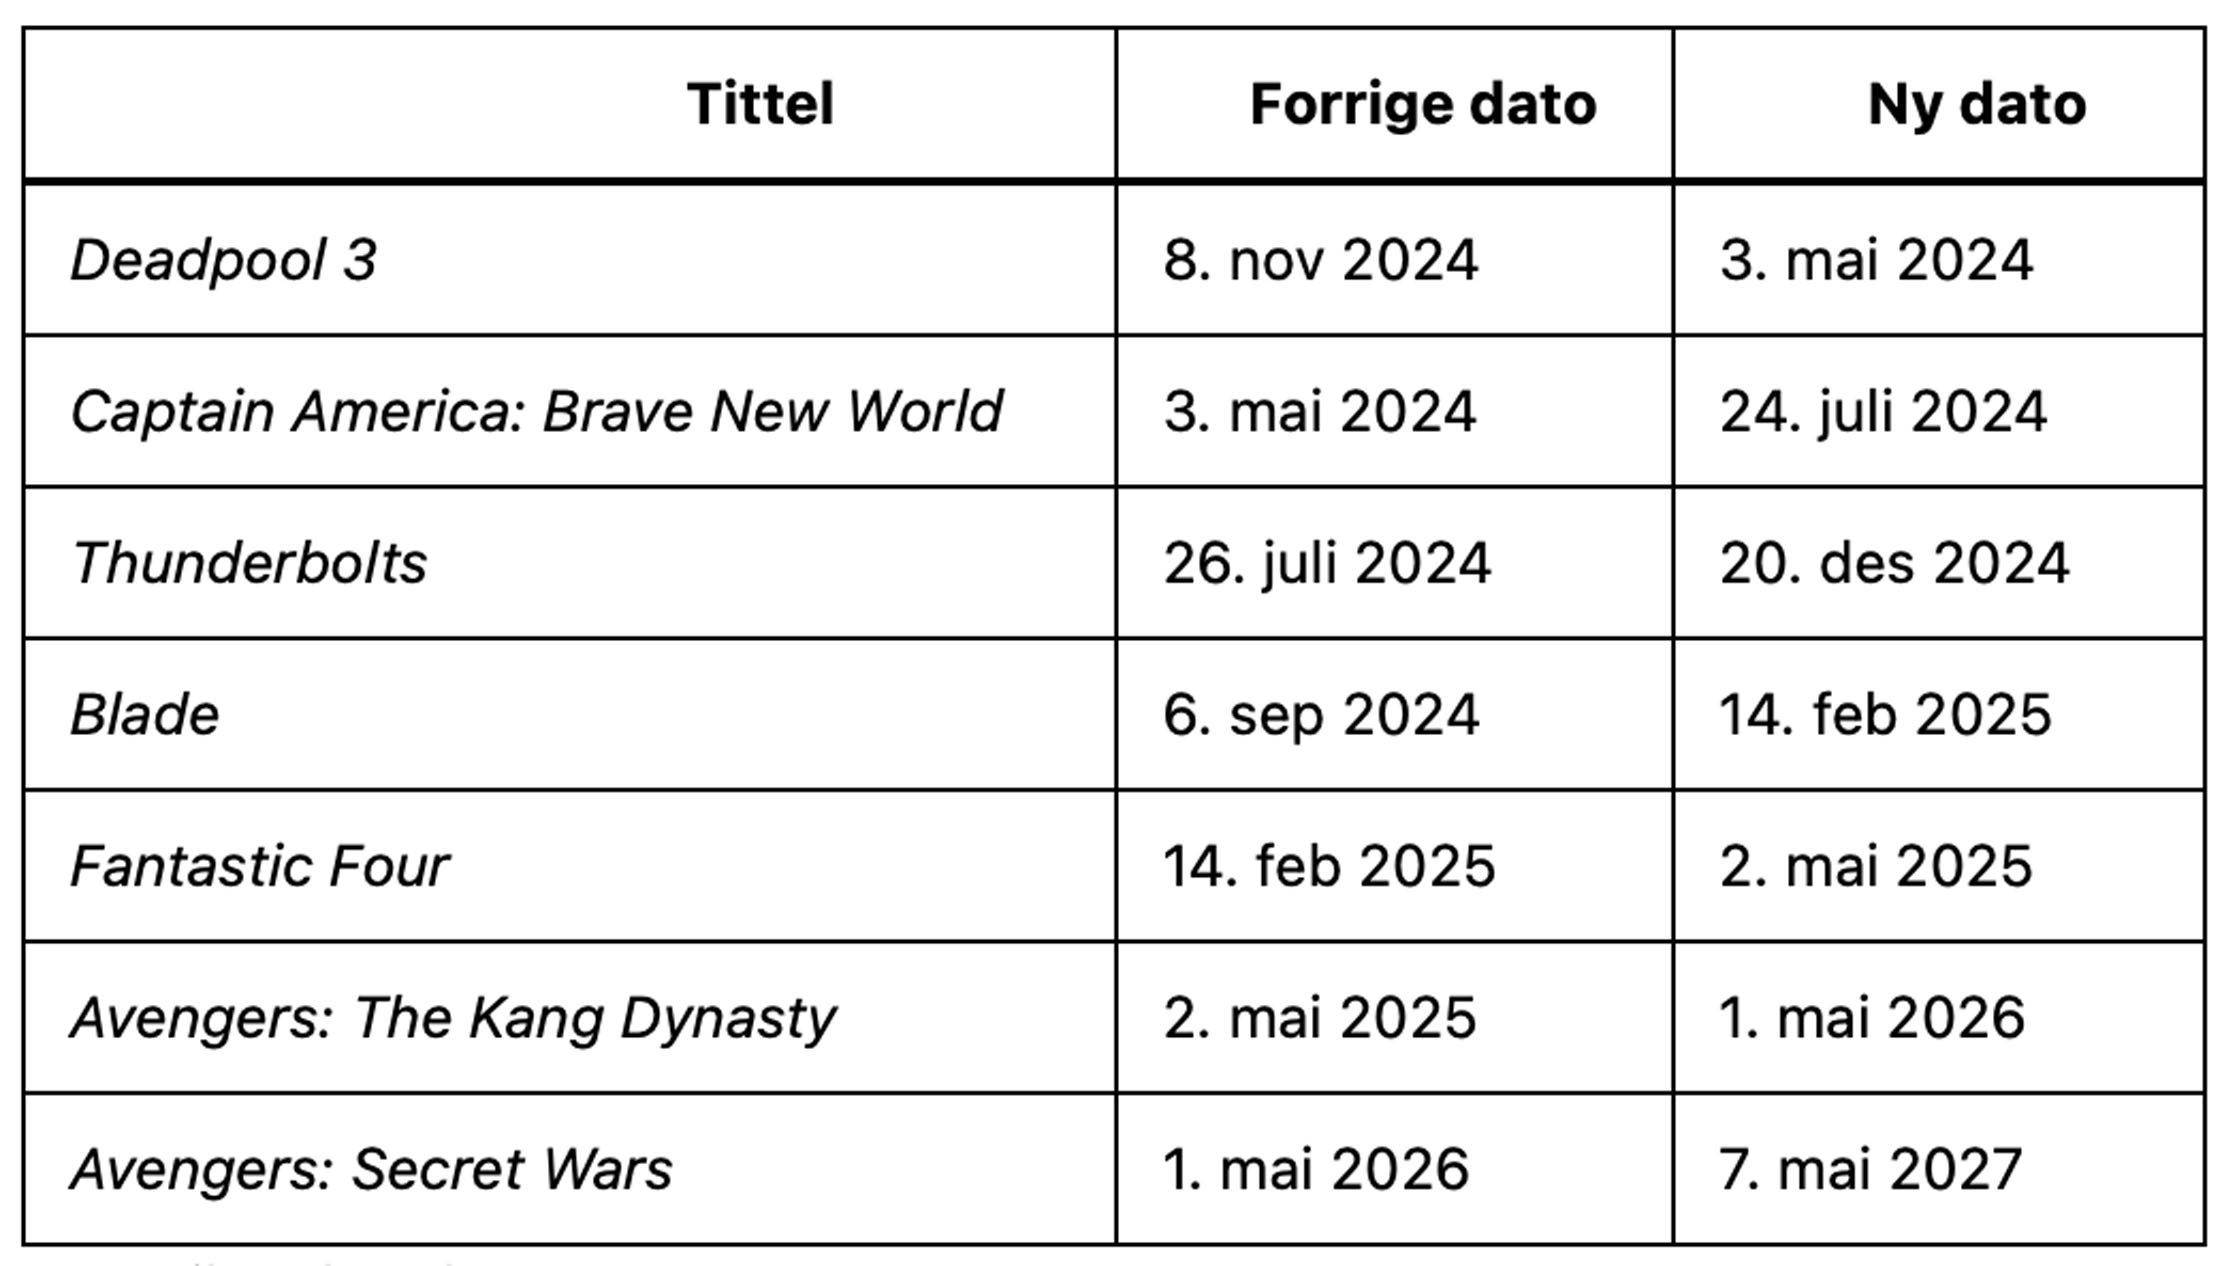 mcu phase 5 6 new premiere dates 2024 2025 2026 2027